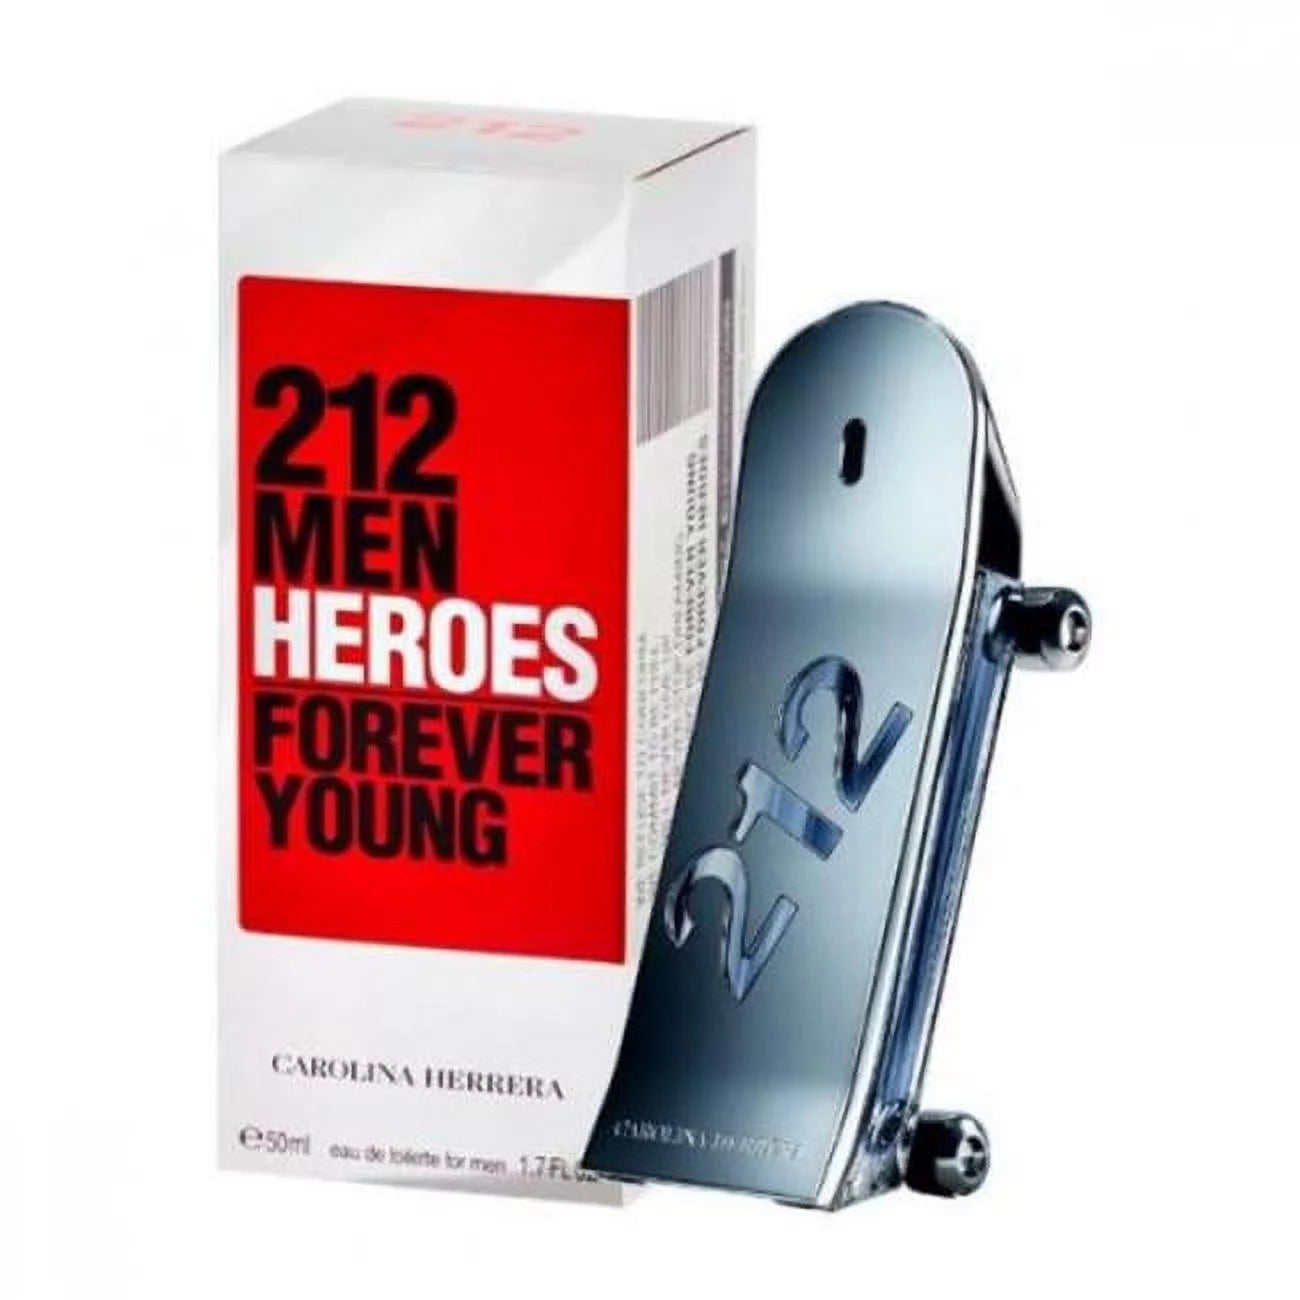 212 Men Heroes Forever Young By Carolina Herrera For Men 1.7 oz EDT Spray